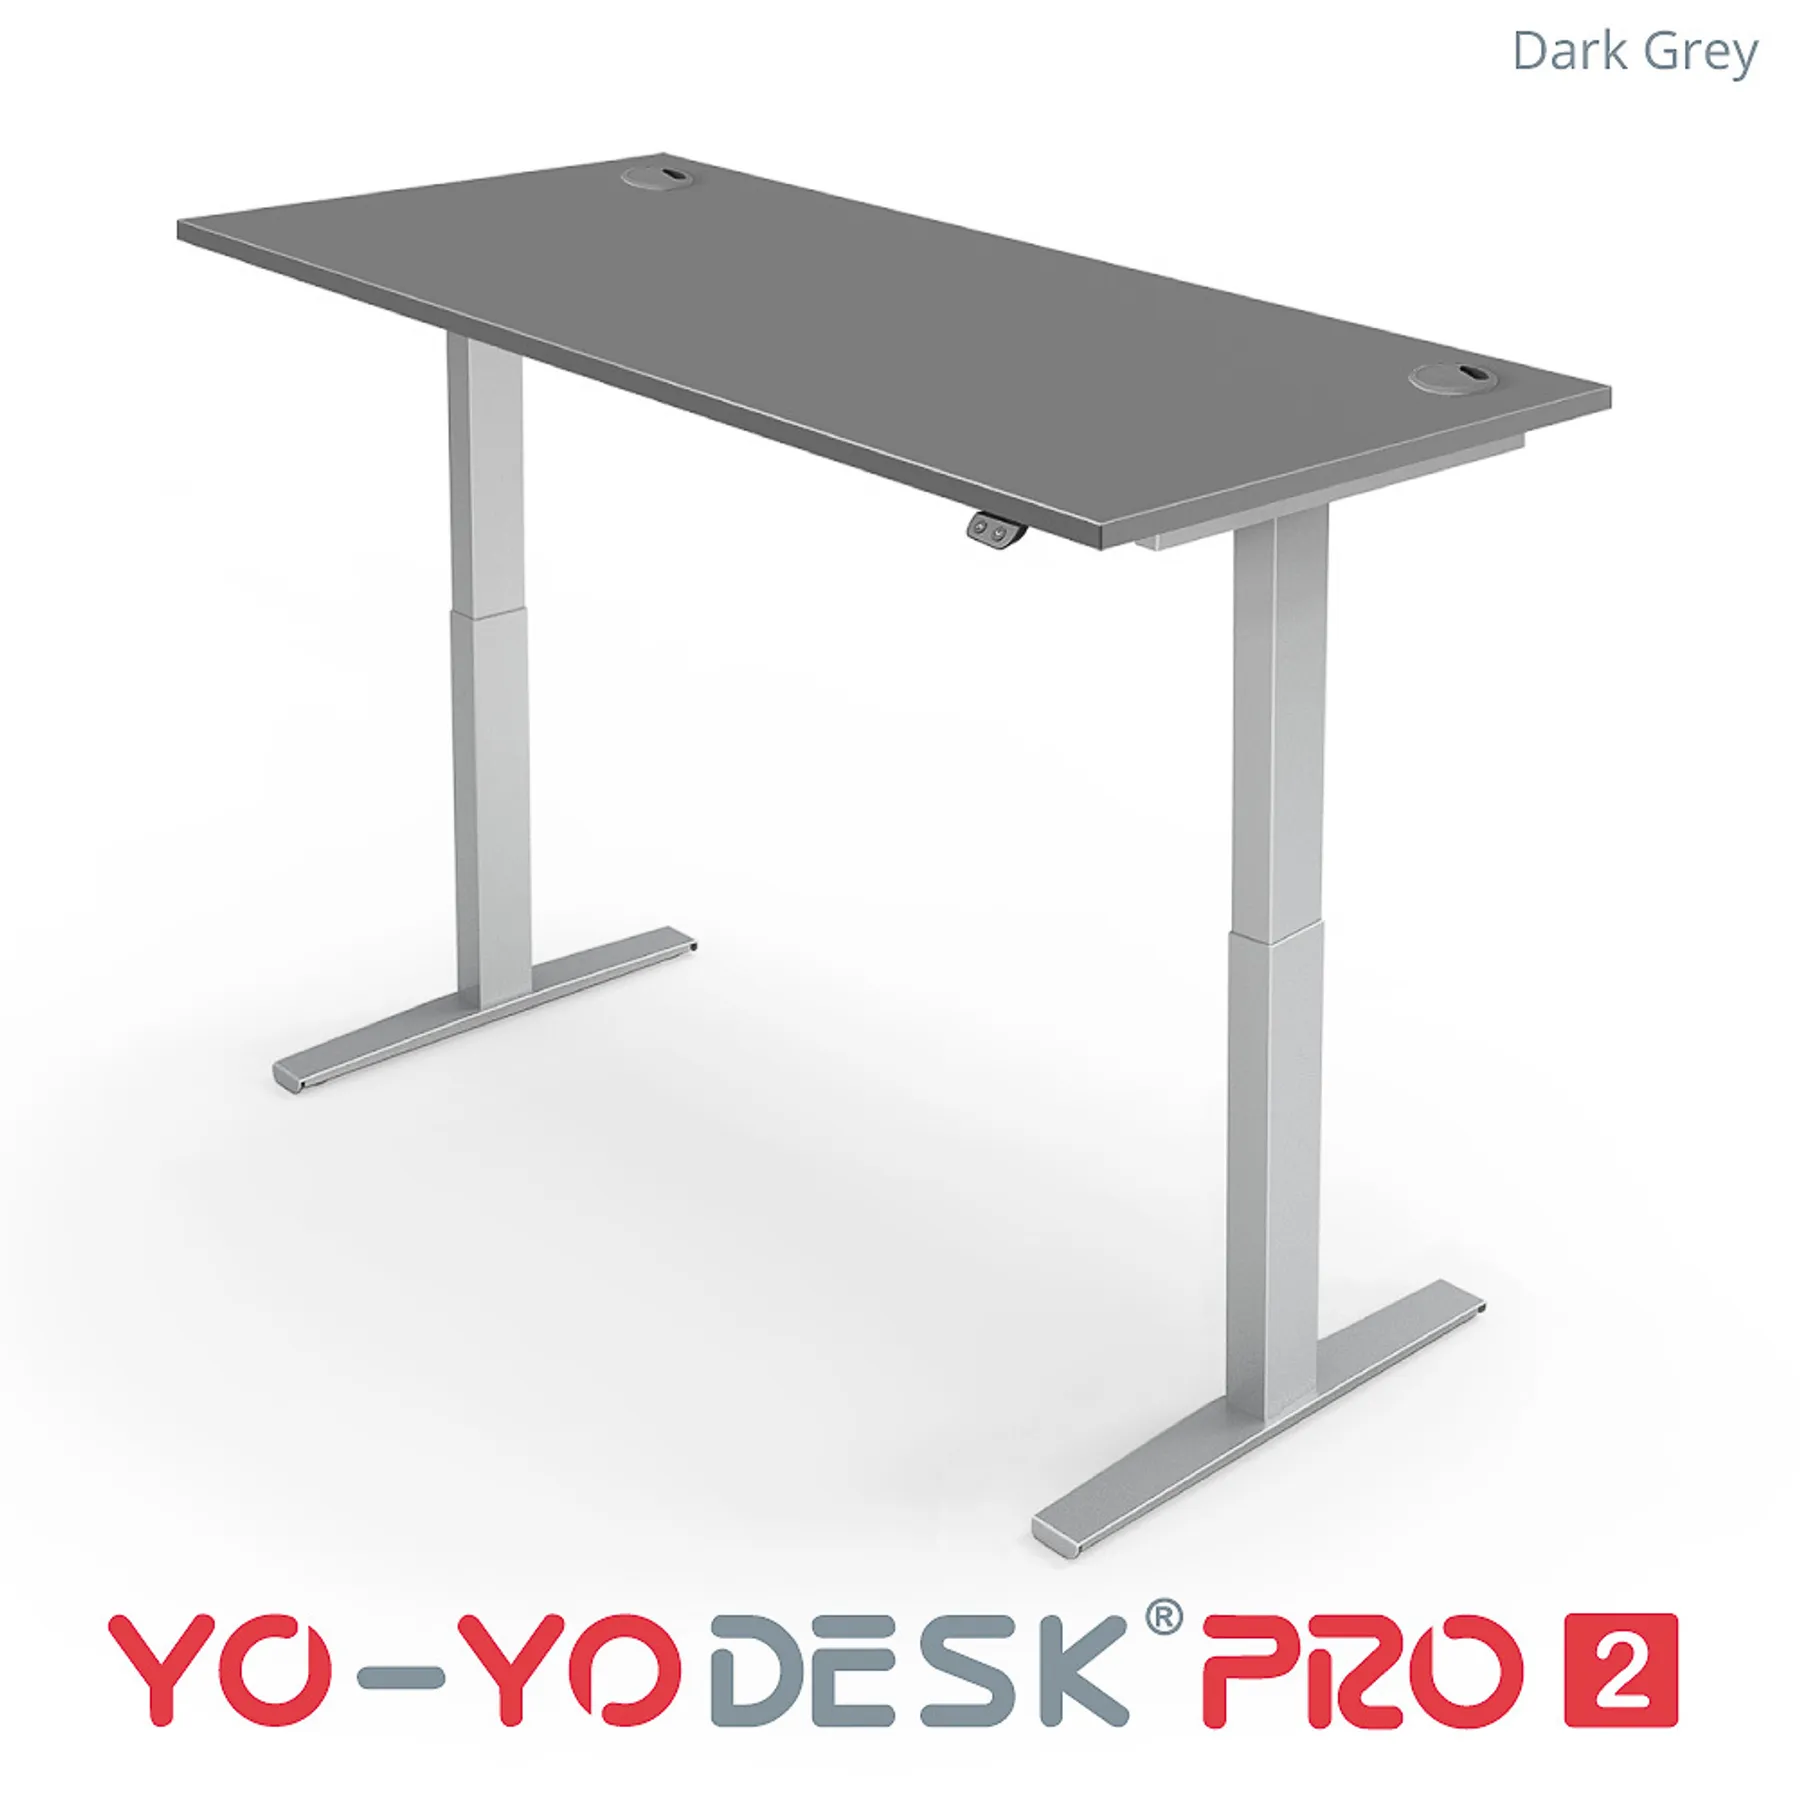 Lof direct yoyo desk pro 2 Chrome frame Dark grey